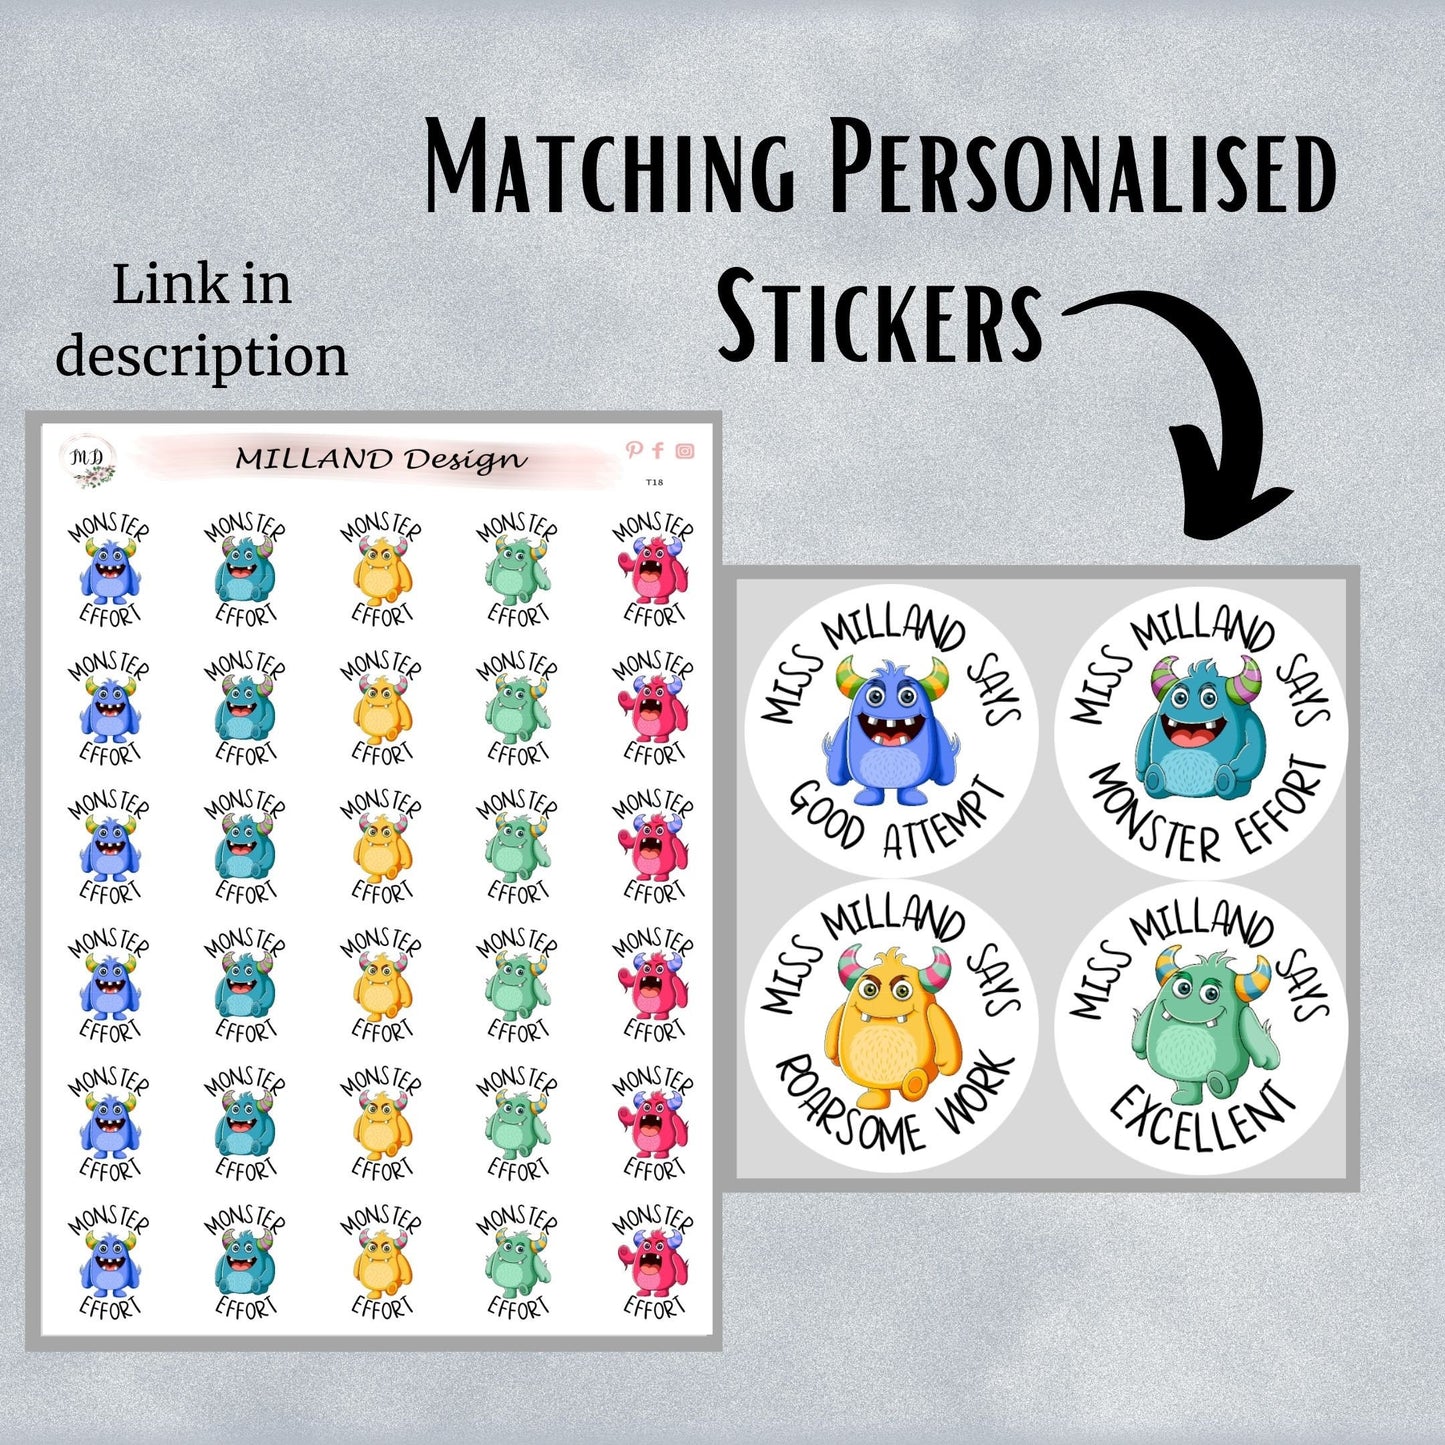 Monster General Merit Stickers